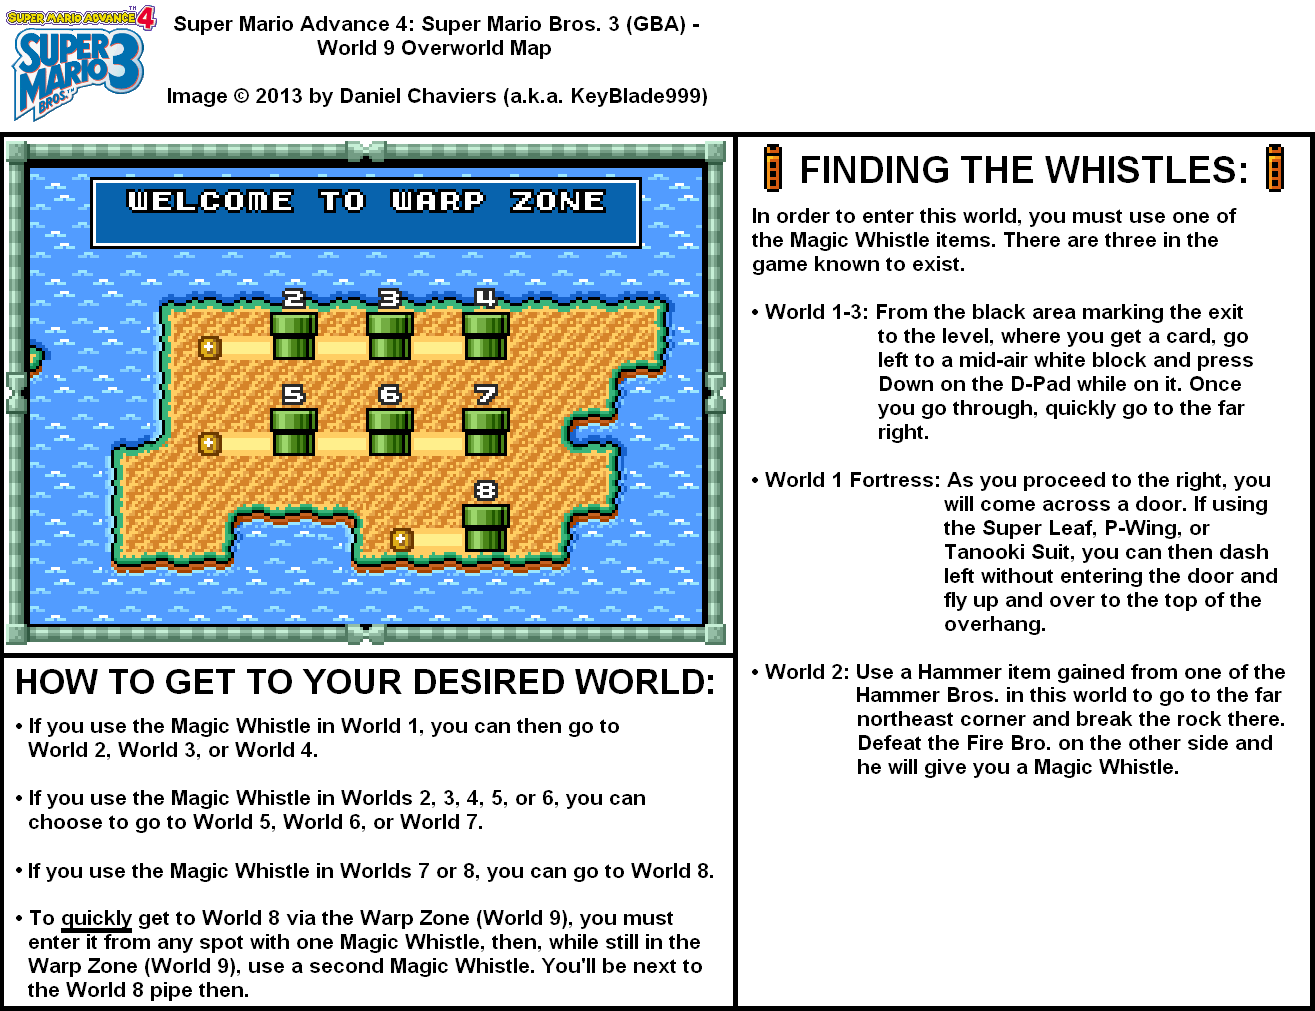 Super Mario Advance 4 Super Mario Bros. 3 World 9 Overworld Map (PNG